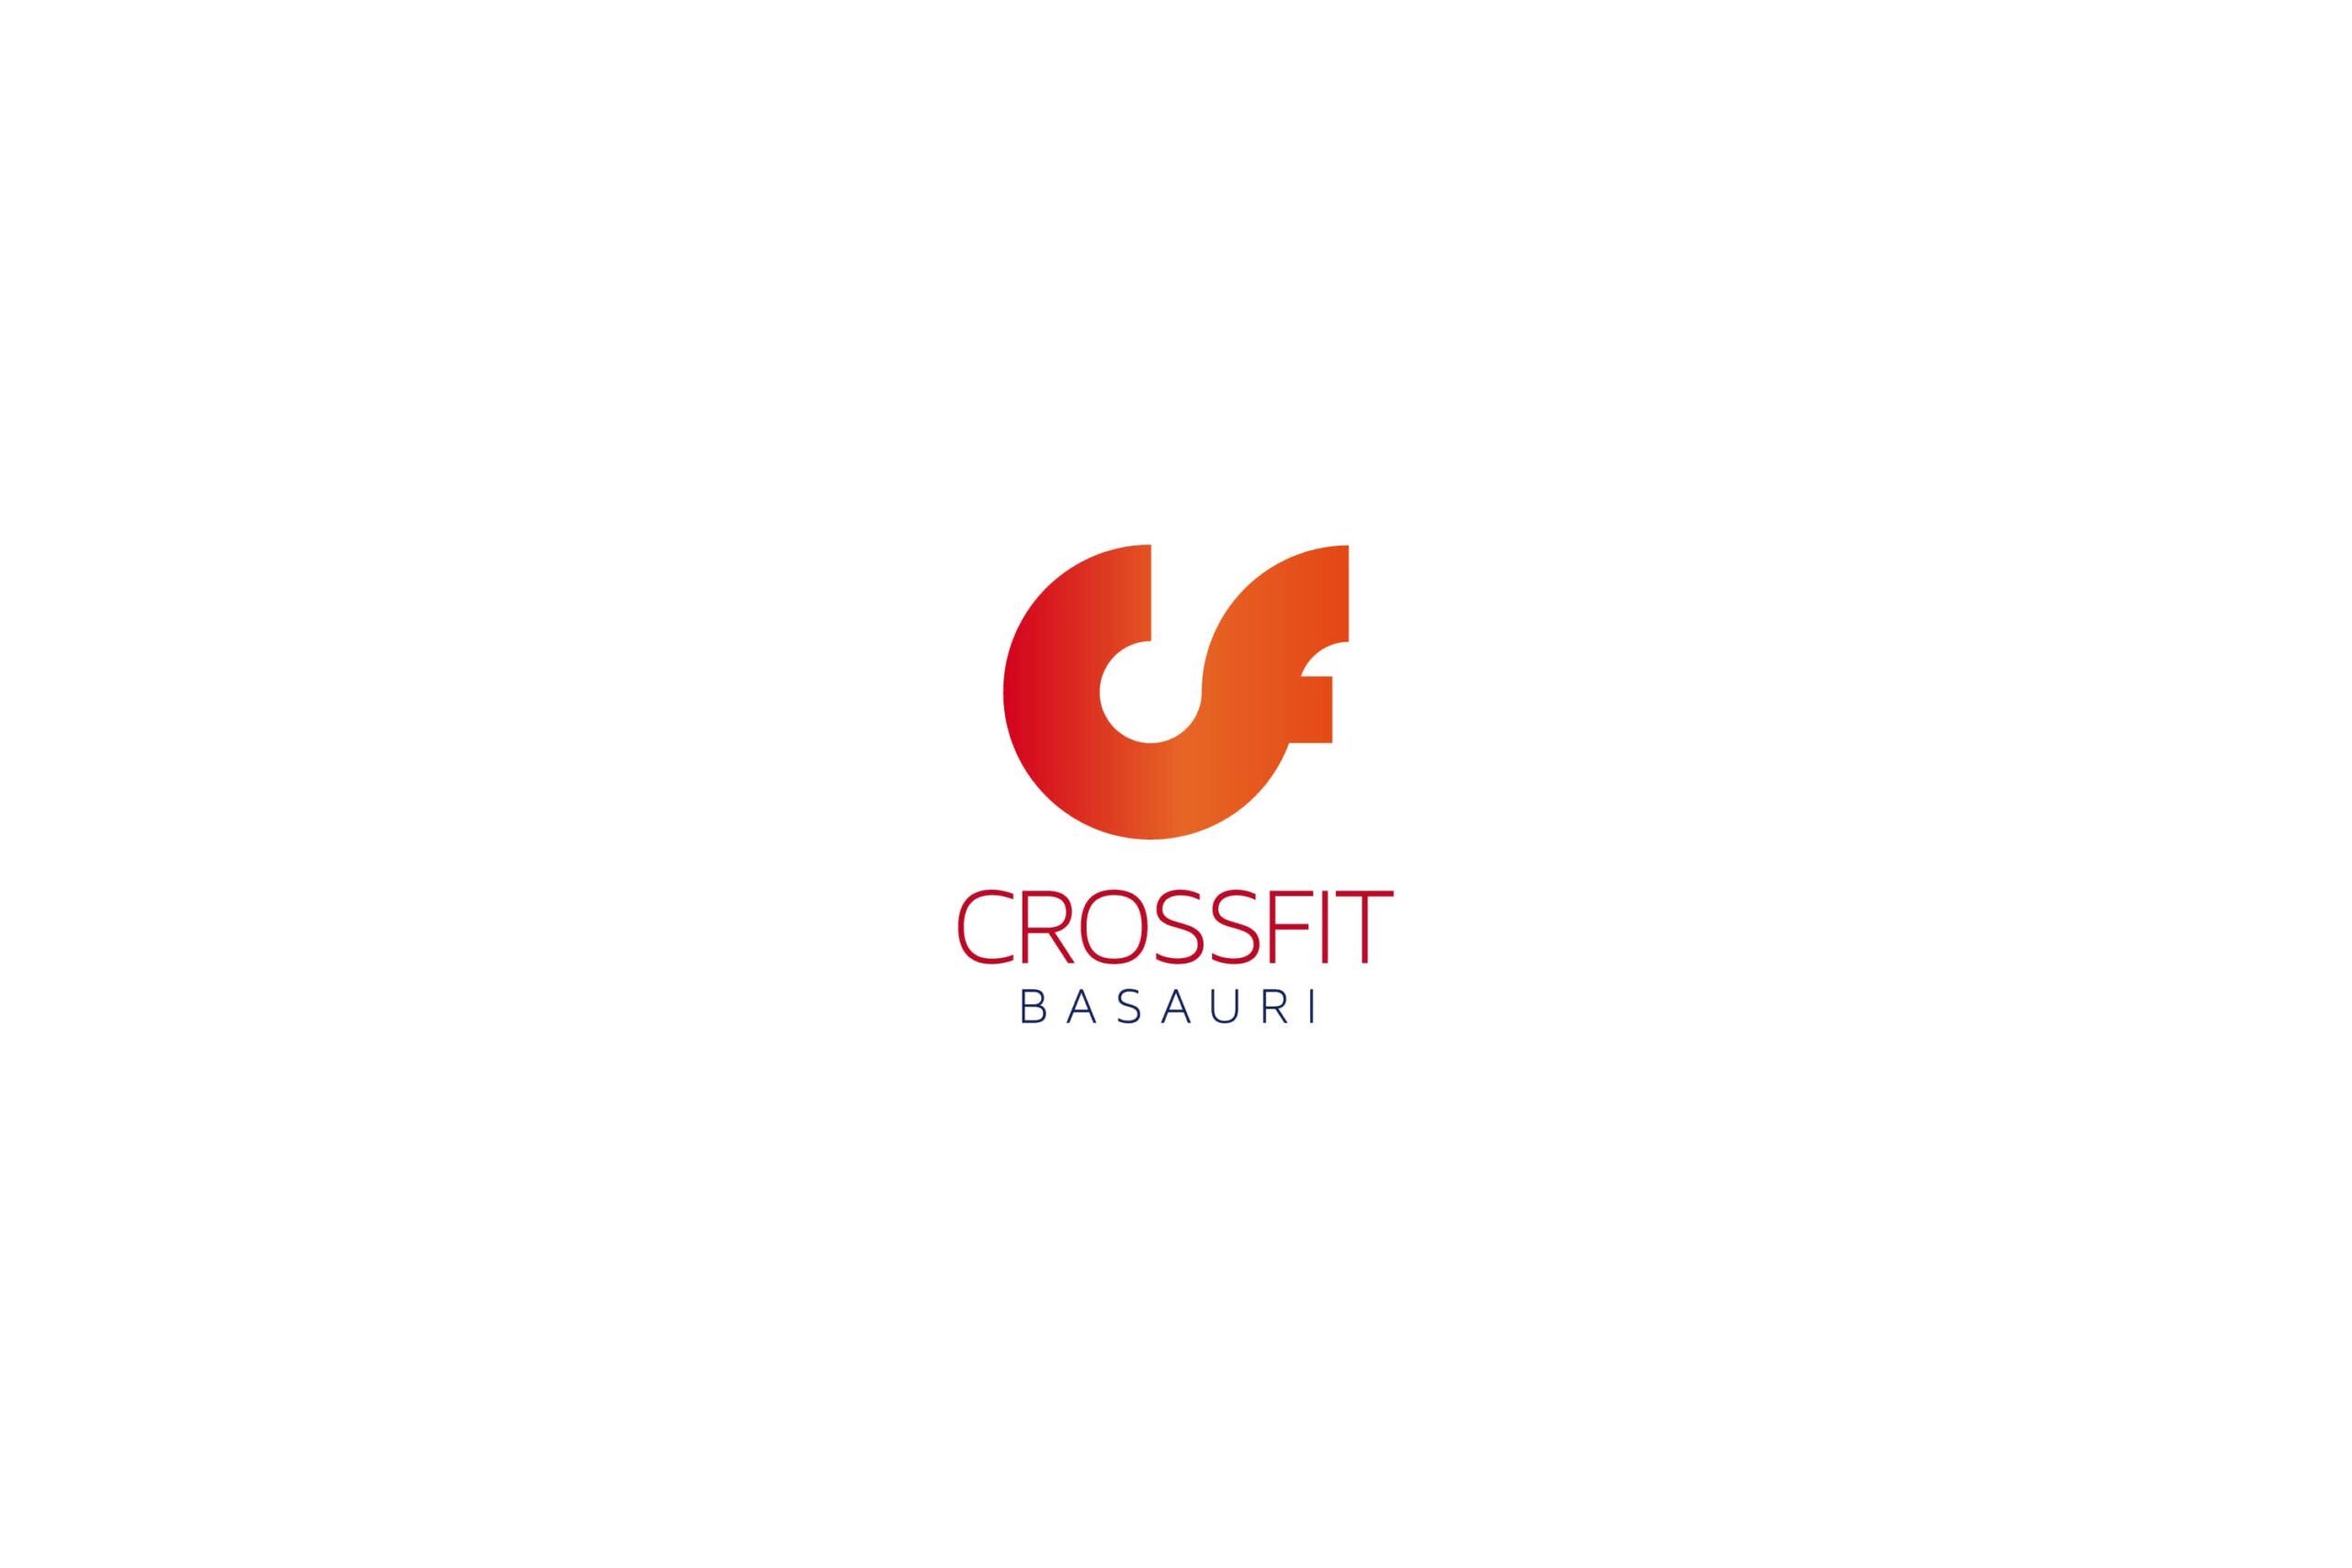 Logo Crossfit Basauri rojo sobre fondo blanco branding por The Acctitude